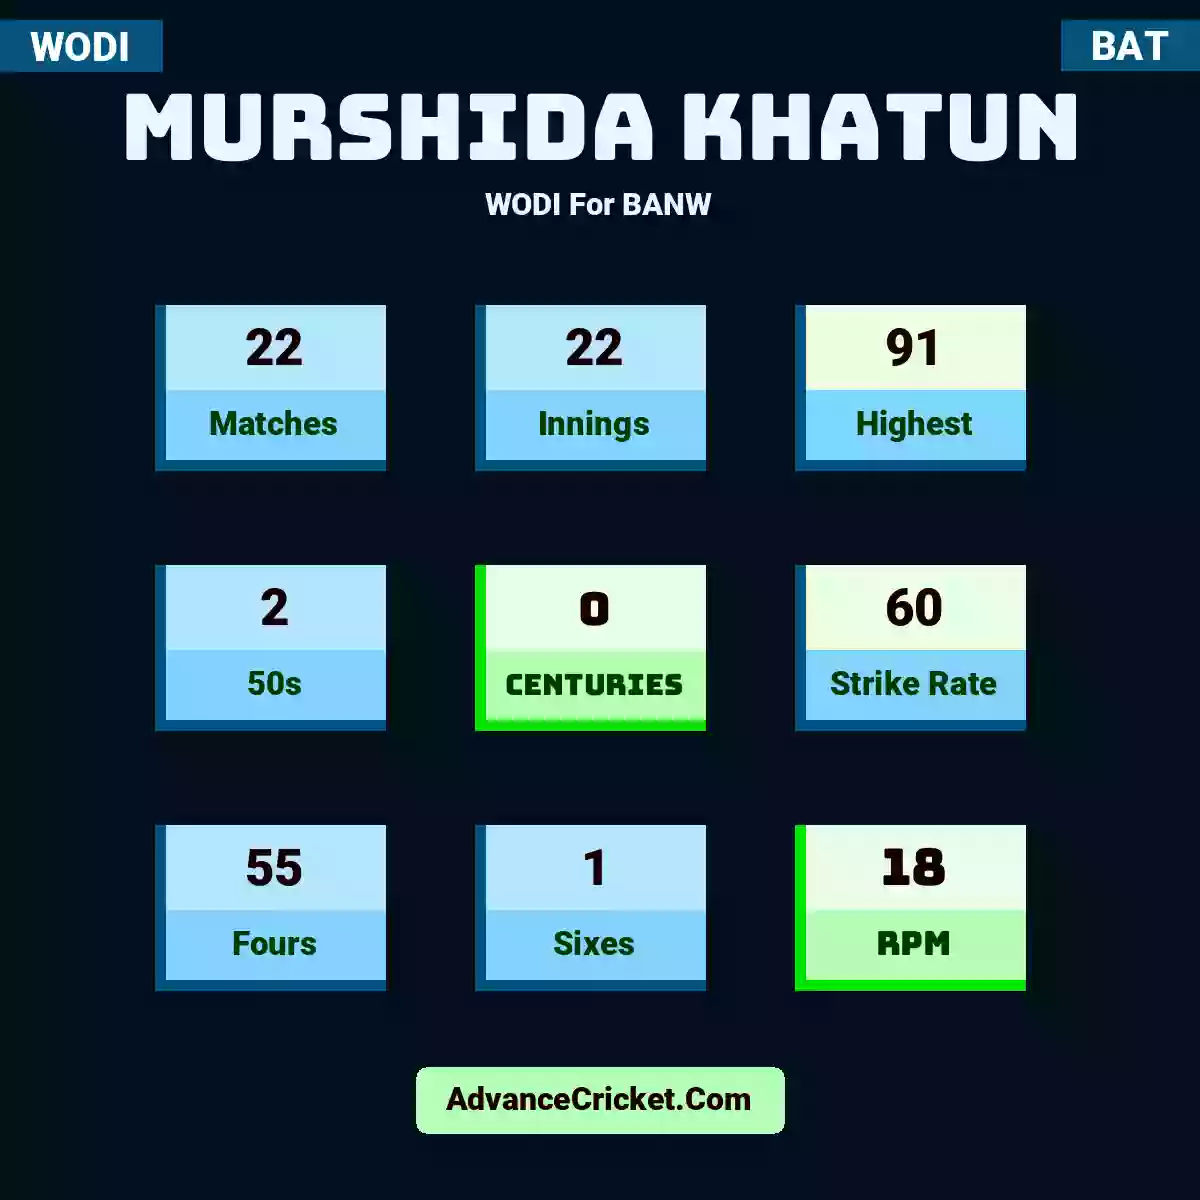 Murshida Khatun WODI  For BANW, Murshida Khatun played 22 matches, scored 91 runs as highest, 2 half-centuries, and 0 centuries, with a strike rate of 60. M.Khatun hit 55 fours and 1 sixes, with an RPM of 18.